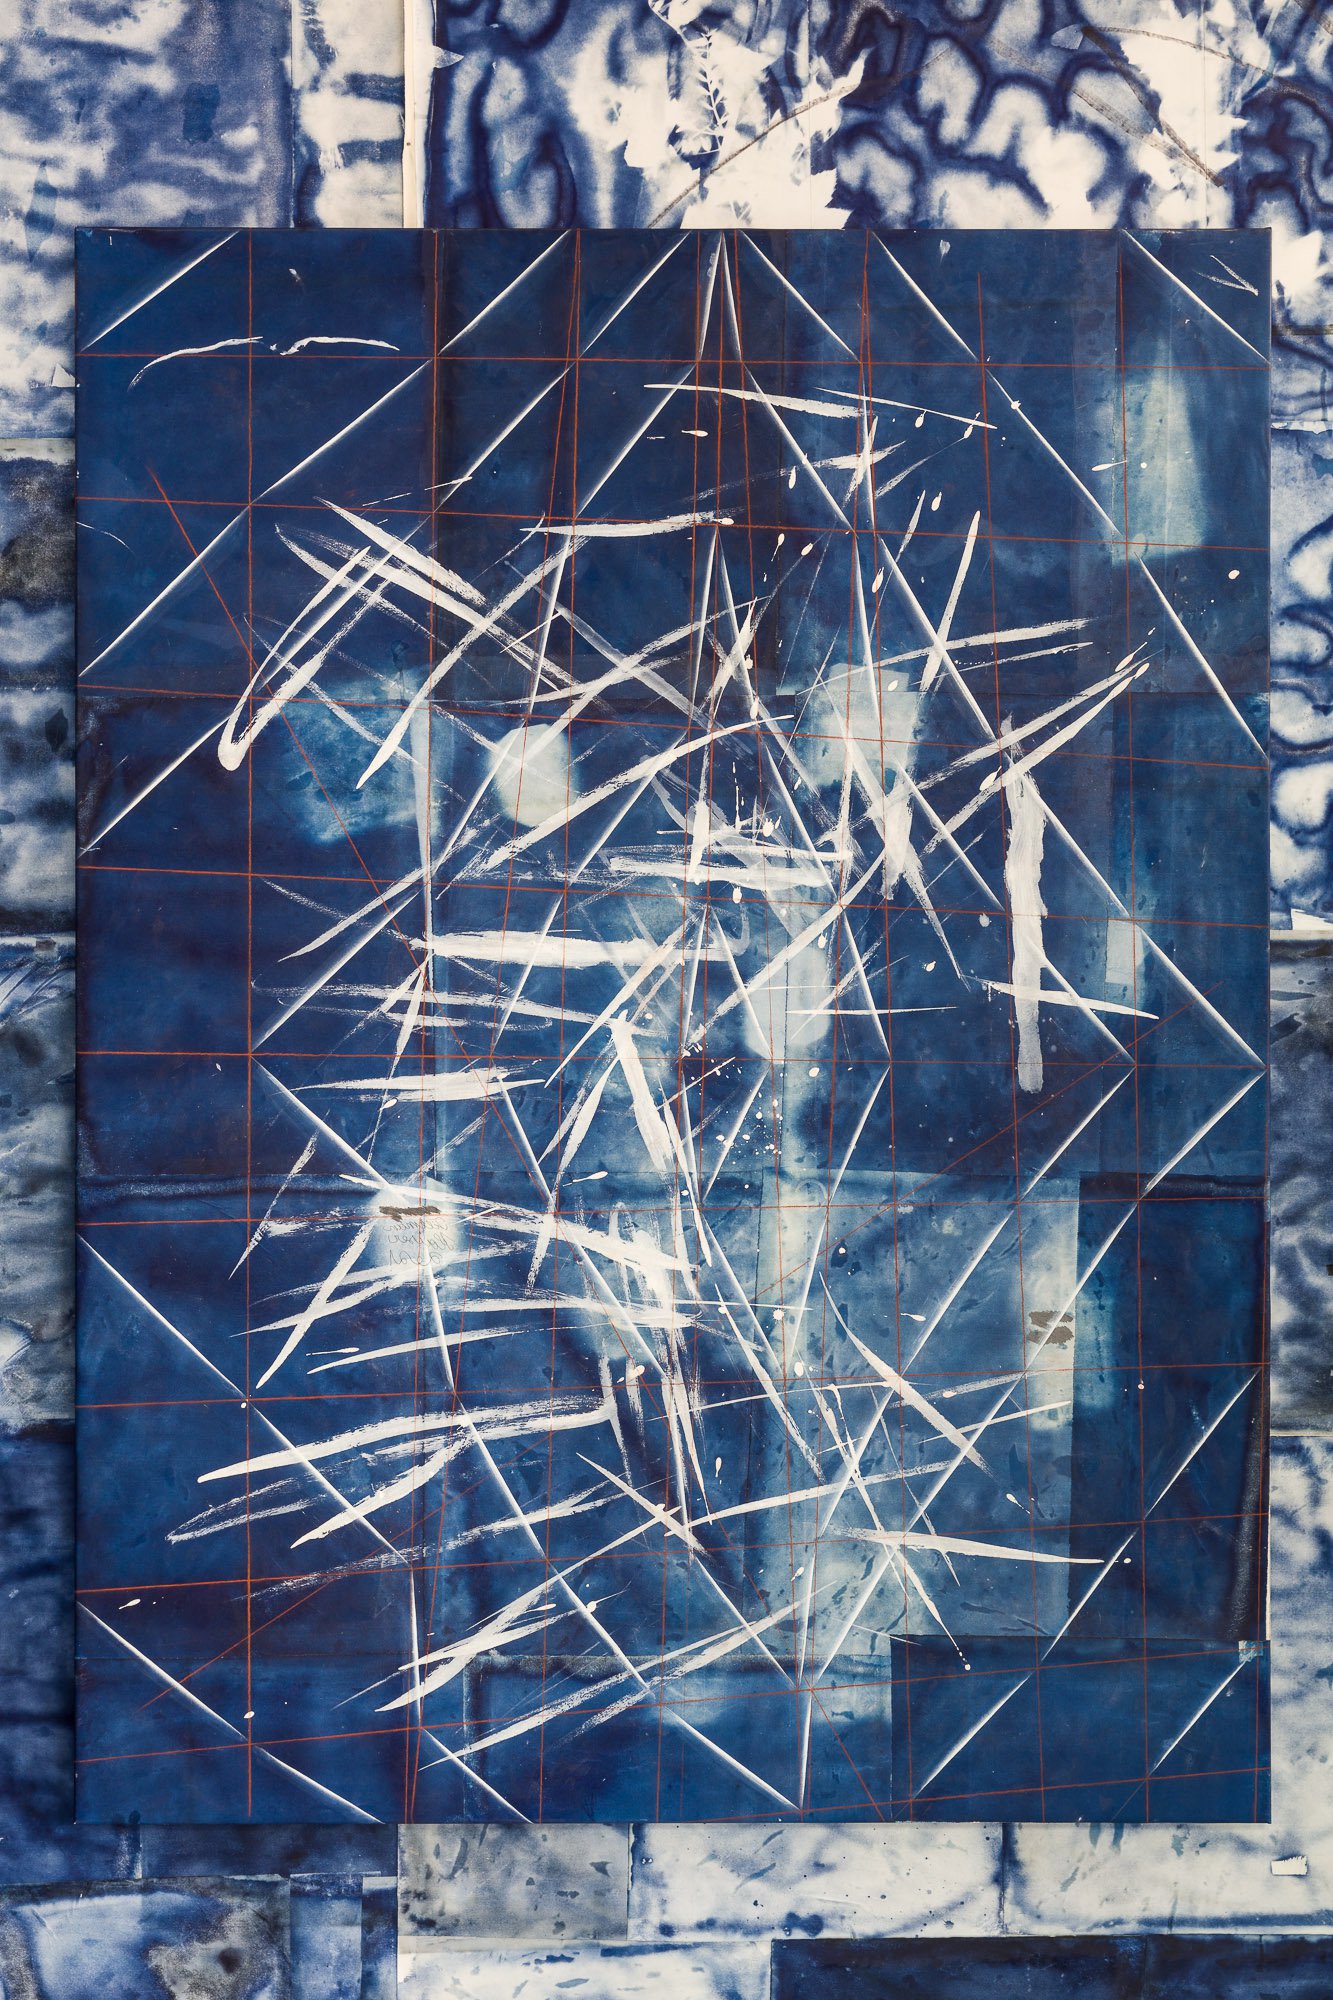 Tillman KaiserRegenwasser, 2021Oil/eggtempera on cyanotype on paper/canvas200 x 150 cm